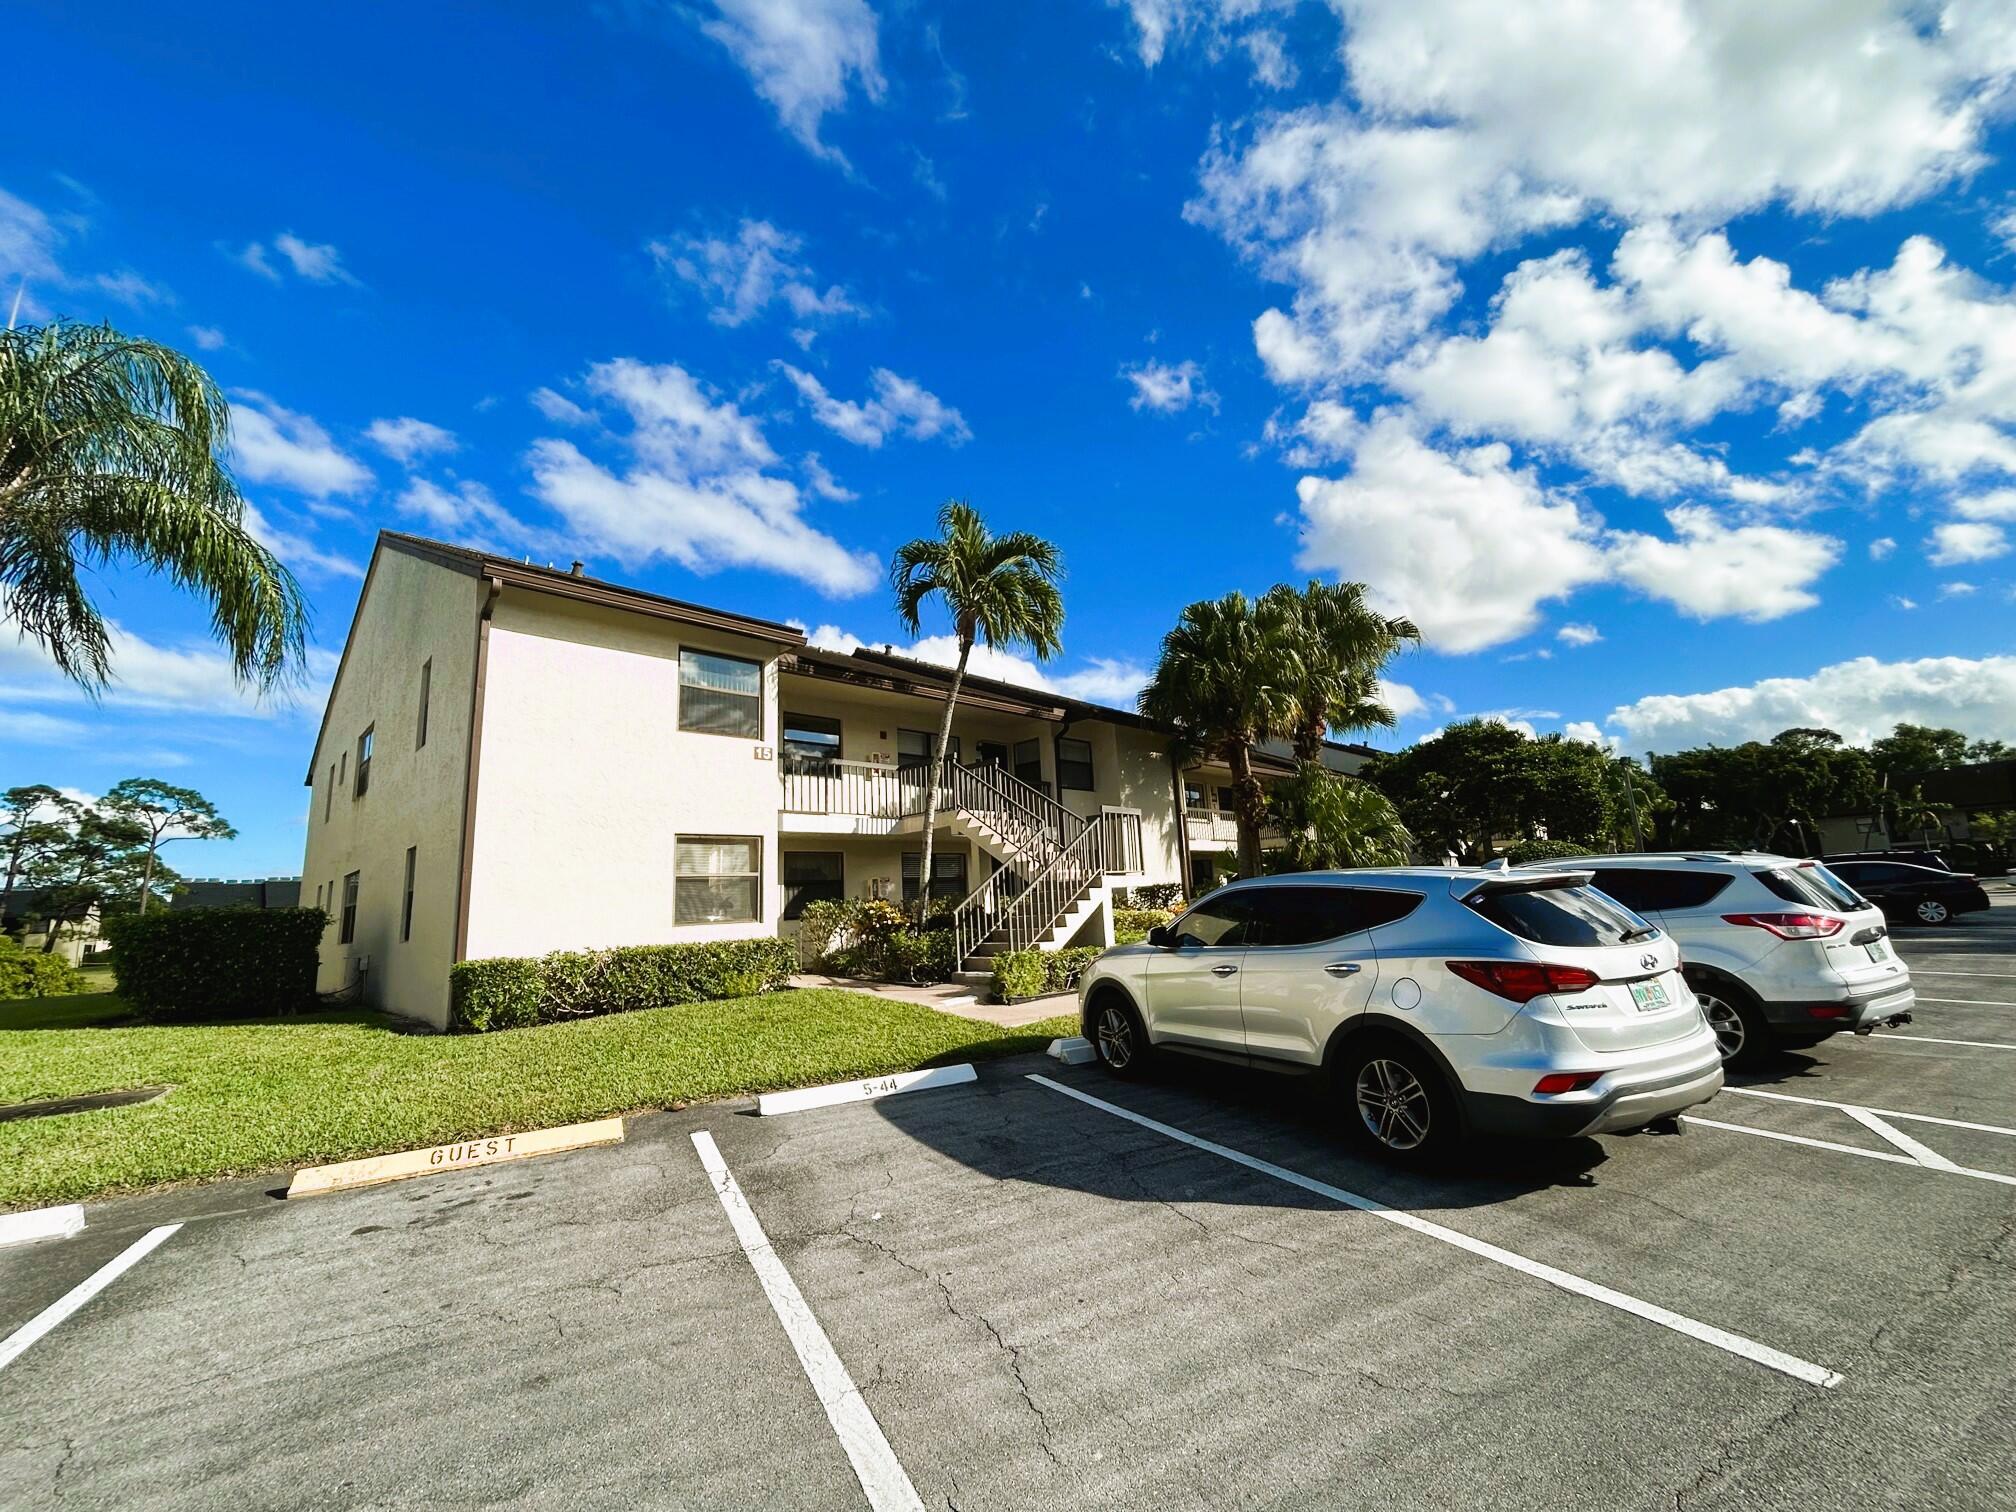 Property for Sale at 7590 Tahiti Lane 201, Lake Worth, Palm Beach County, Florida - Bedrooms: 3 
Bathrooms: 2  - $299,900